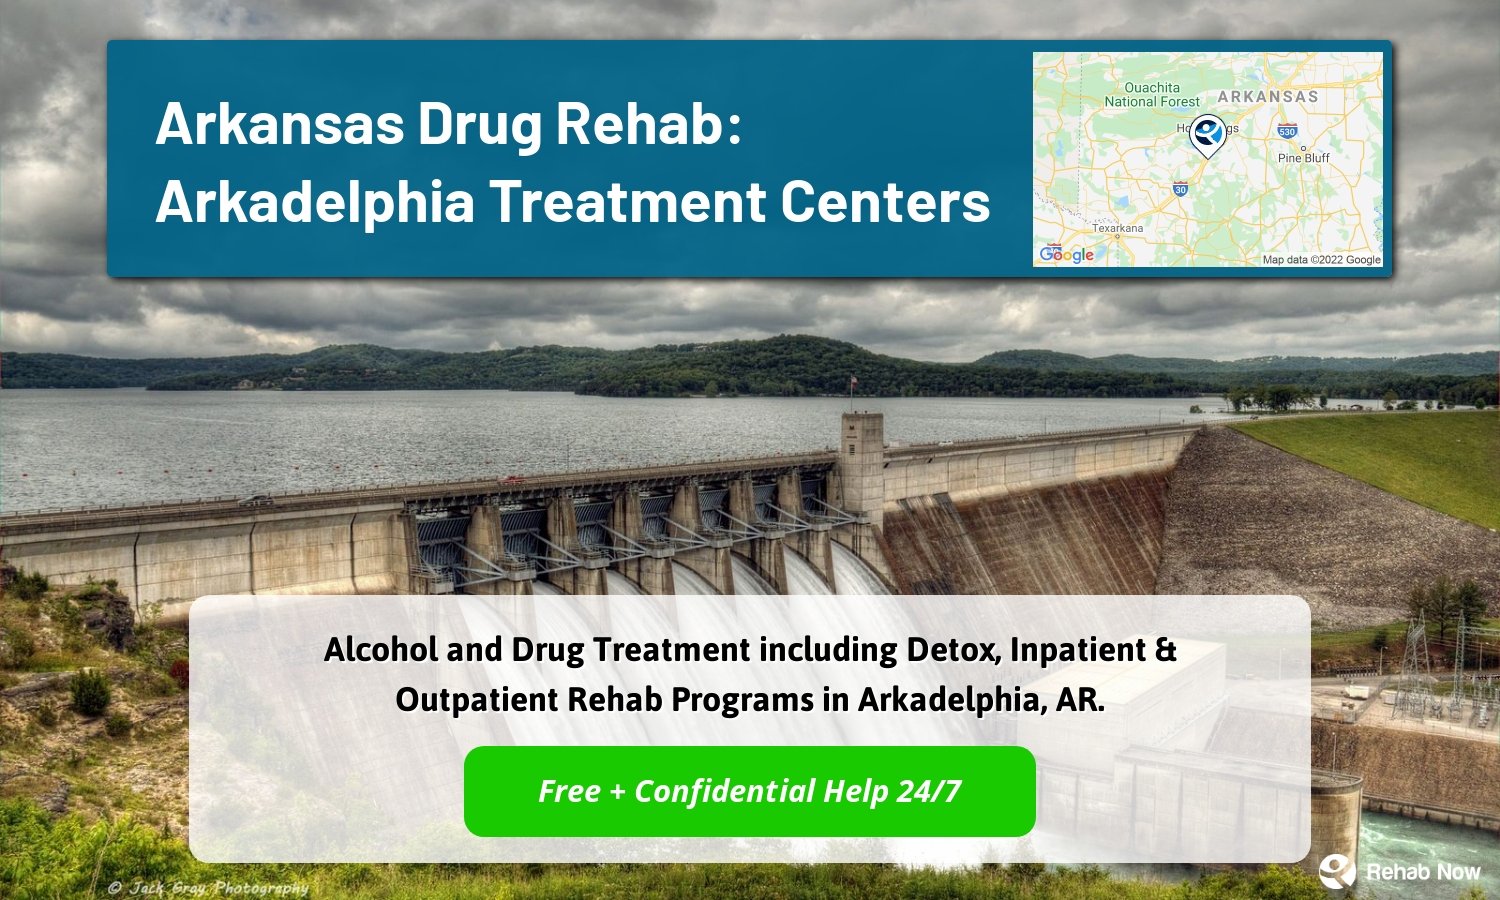 Alcohol and Drug Treatment including Detox, Inpatient & Outpatient Rehab Programs in Arkadelphia, AR.